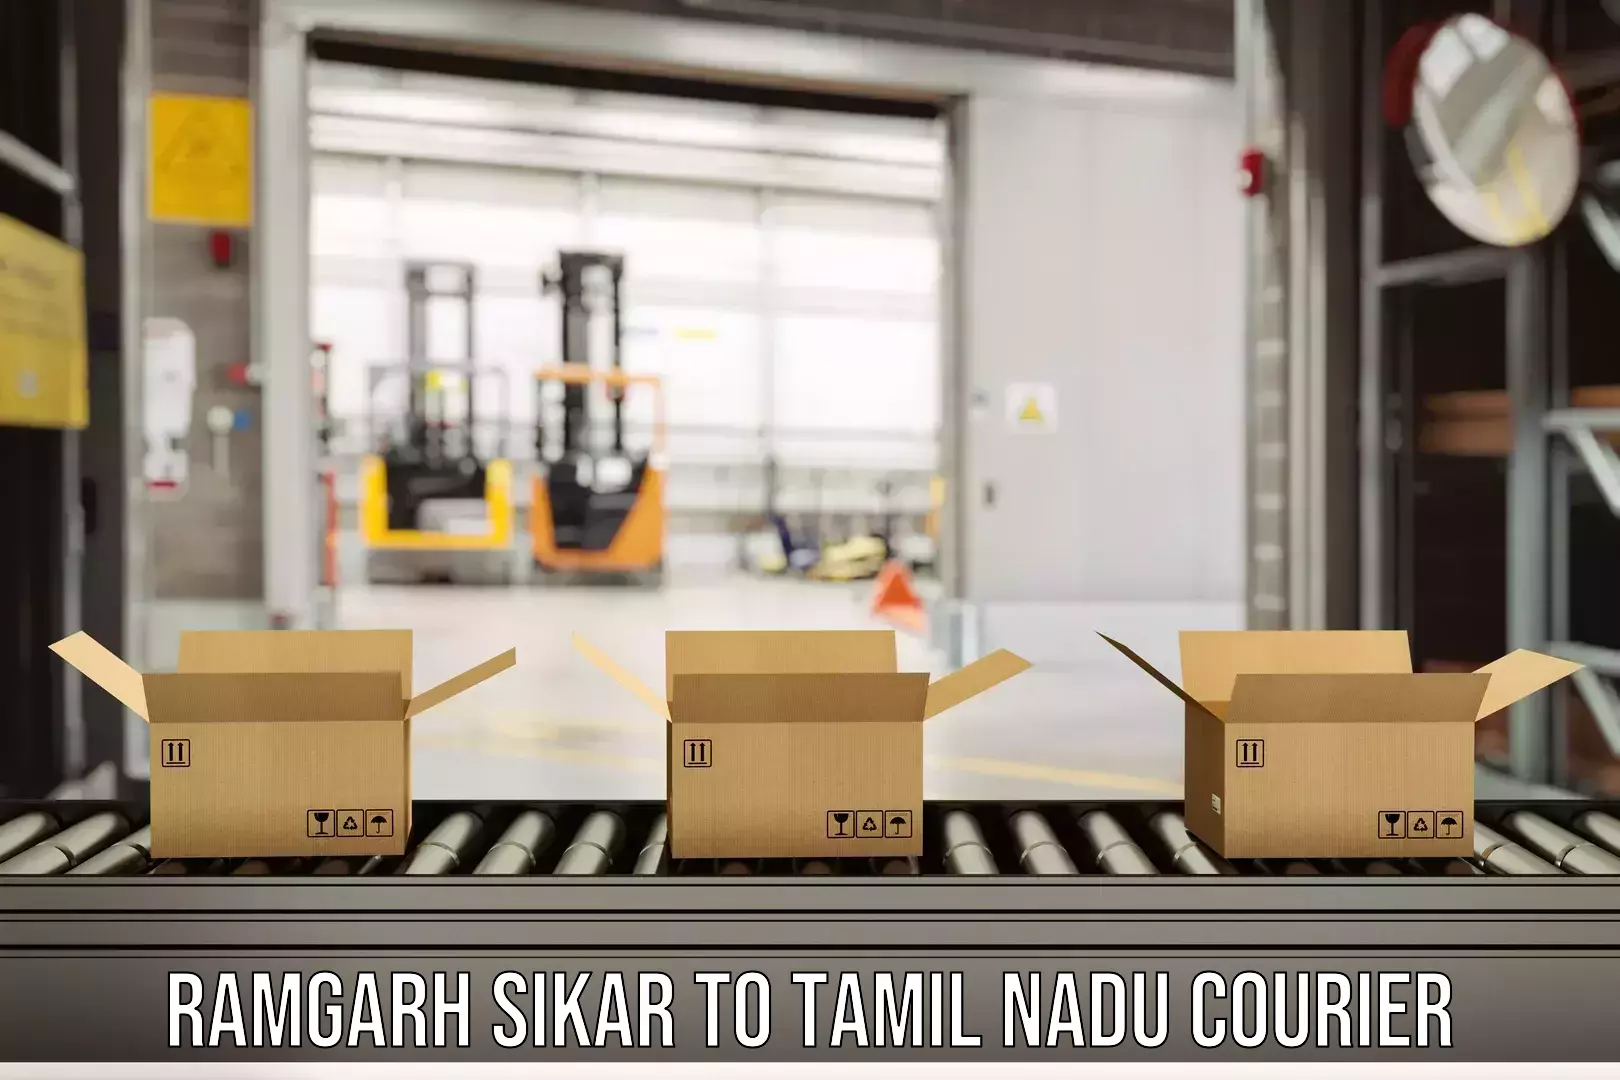 Global shipping solutions Ramgarh Sikar to Ambur